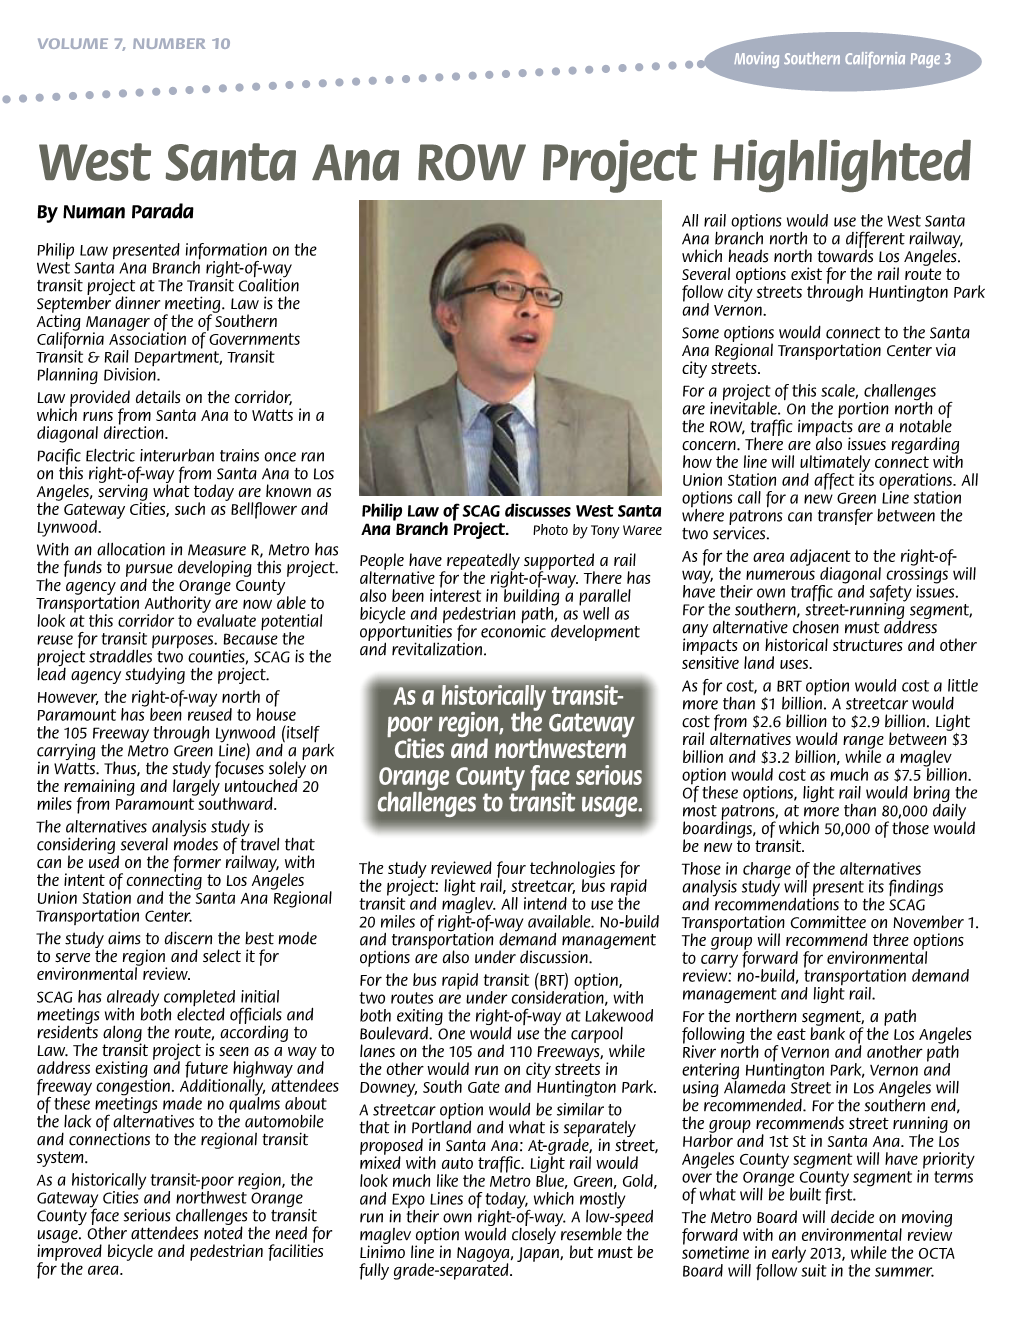 West Santa Ana ROW Project Highlighted